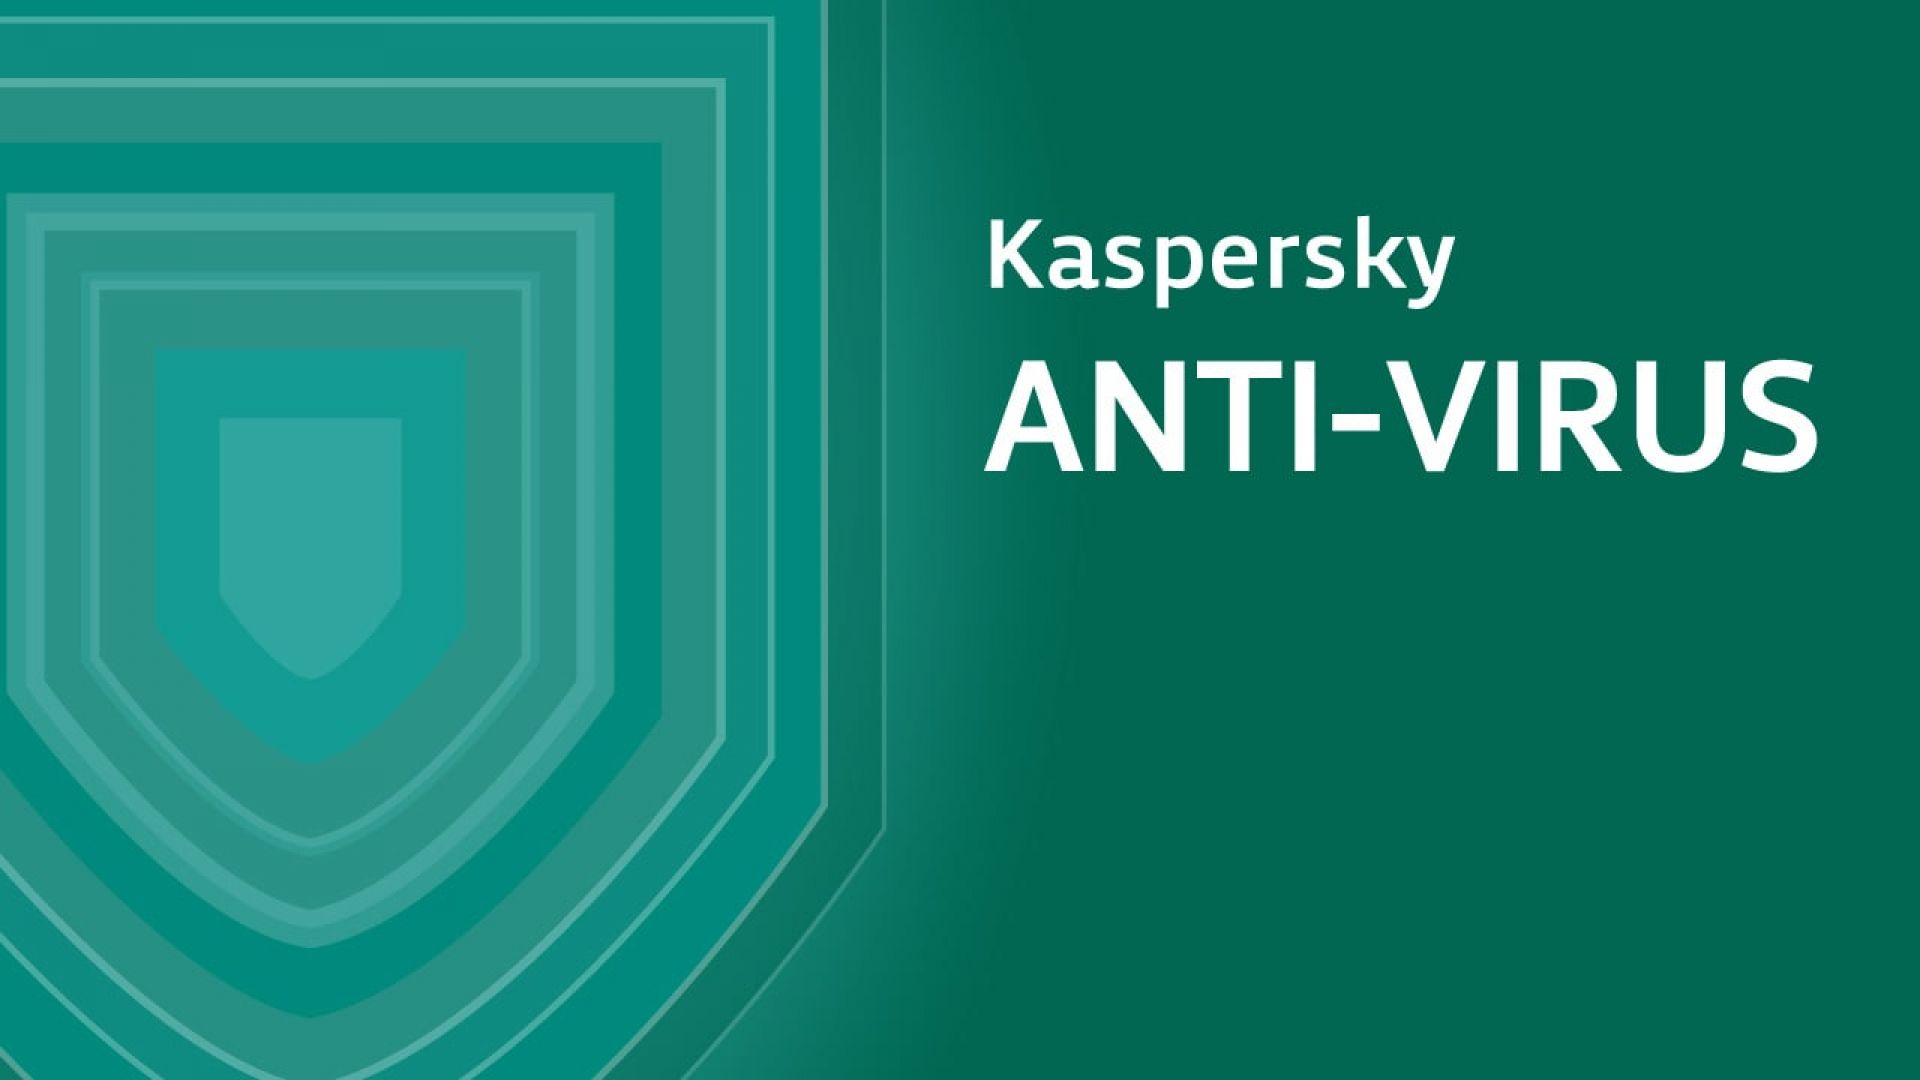 kaspersky antivirus windows 10